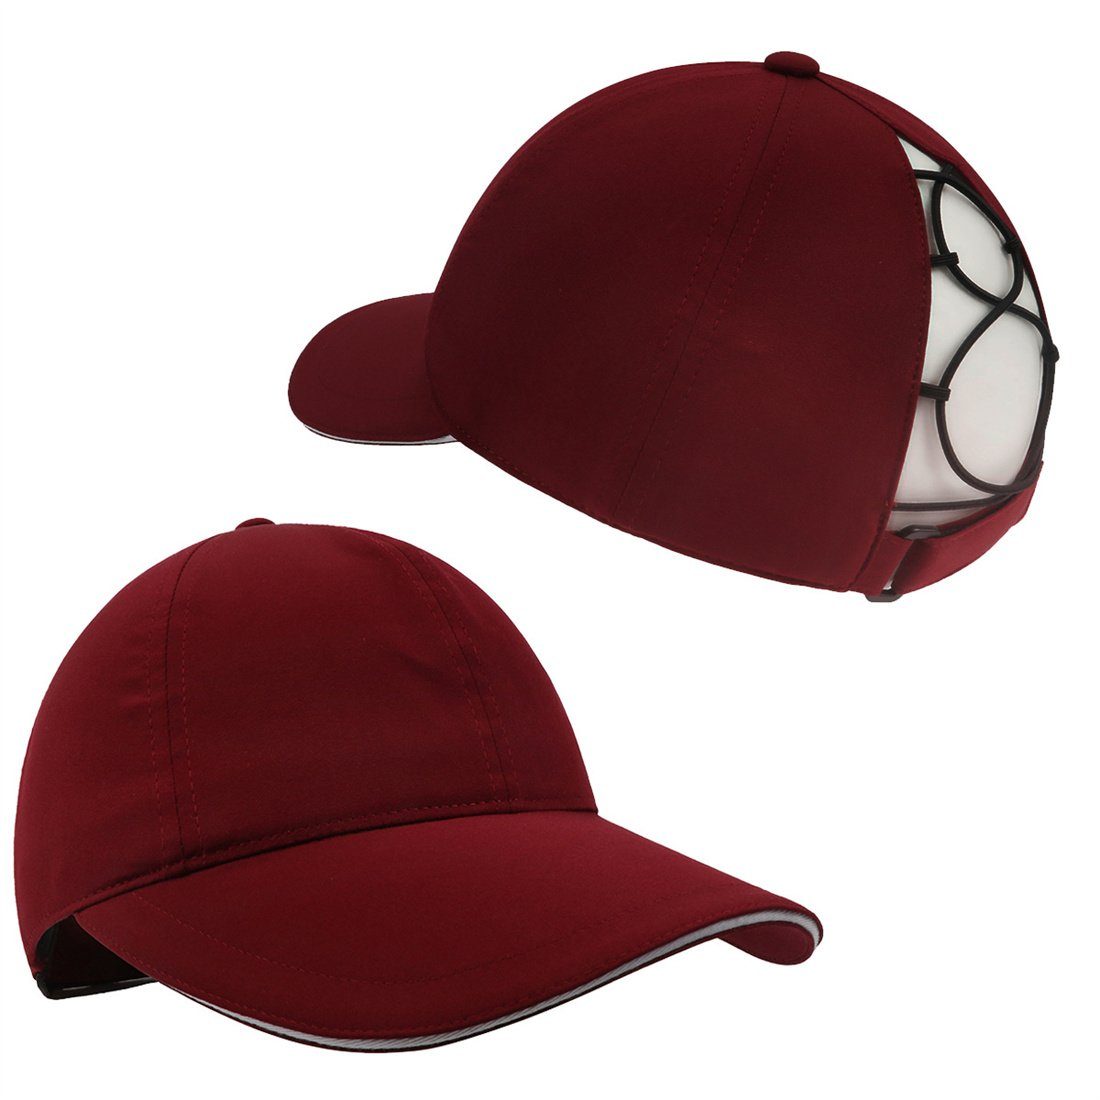 DÖRÖY Baseball Cap Outdoor-Baseballkappe für Frauen,schnell trocknende Kappe,Sonnenblende Rot